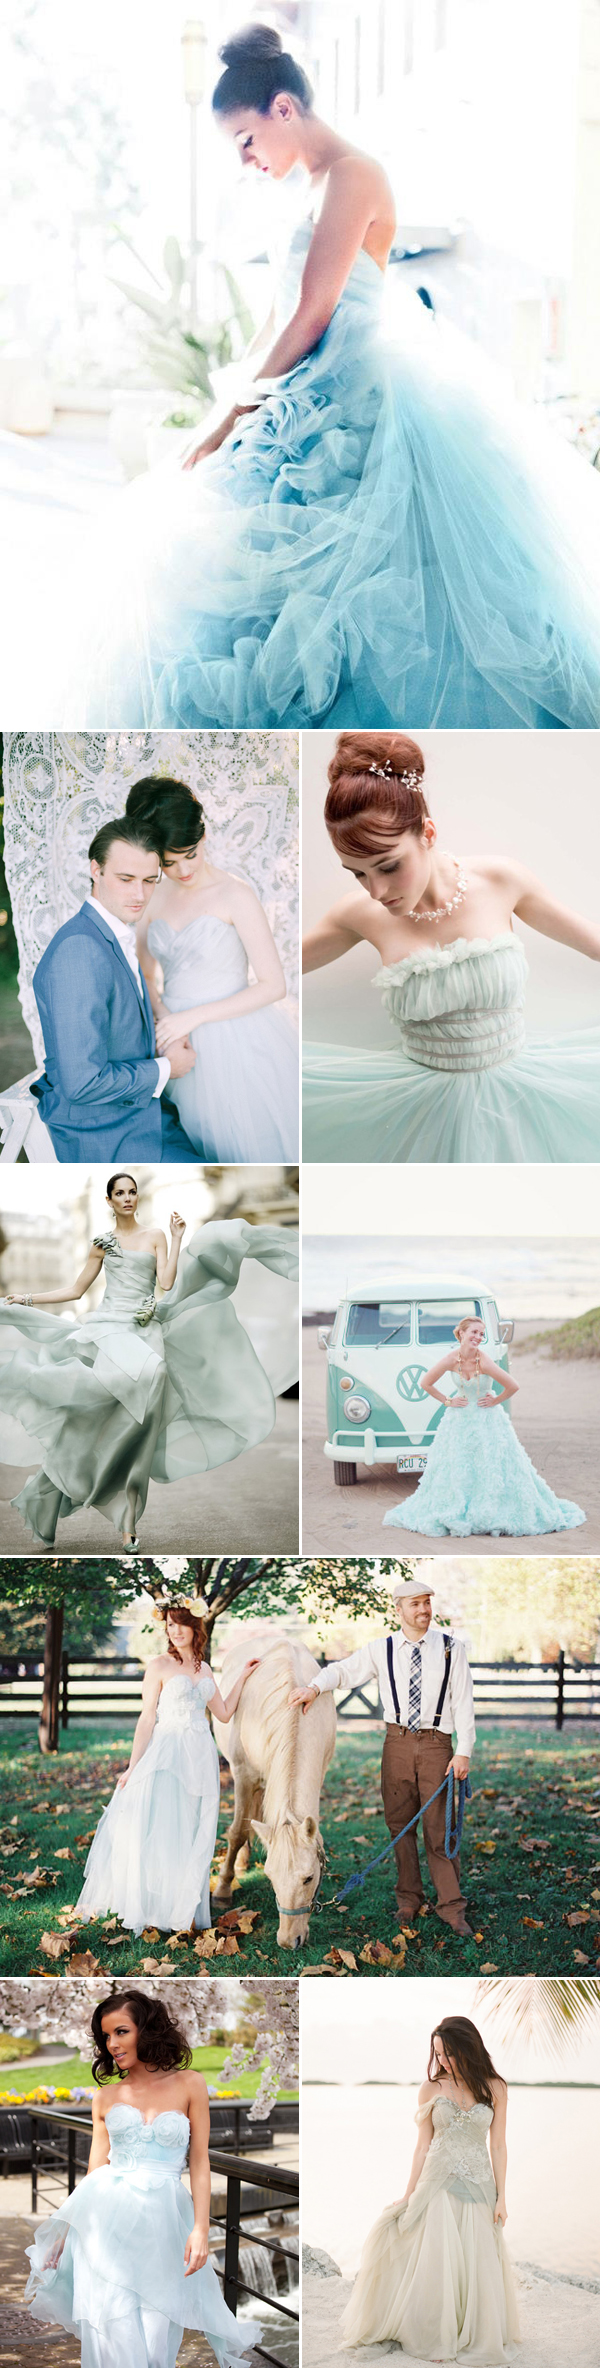 Color wedding dresses01-blue